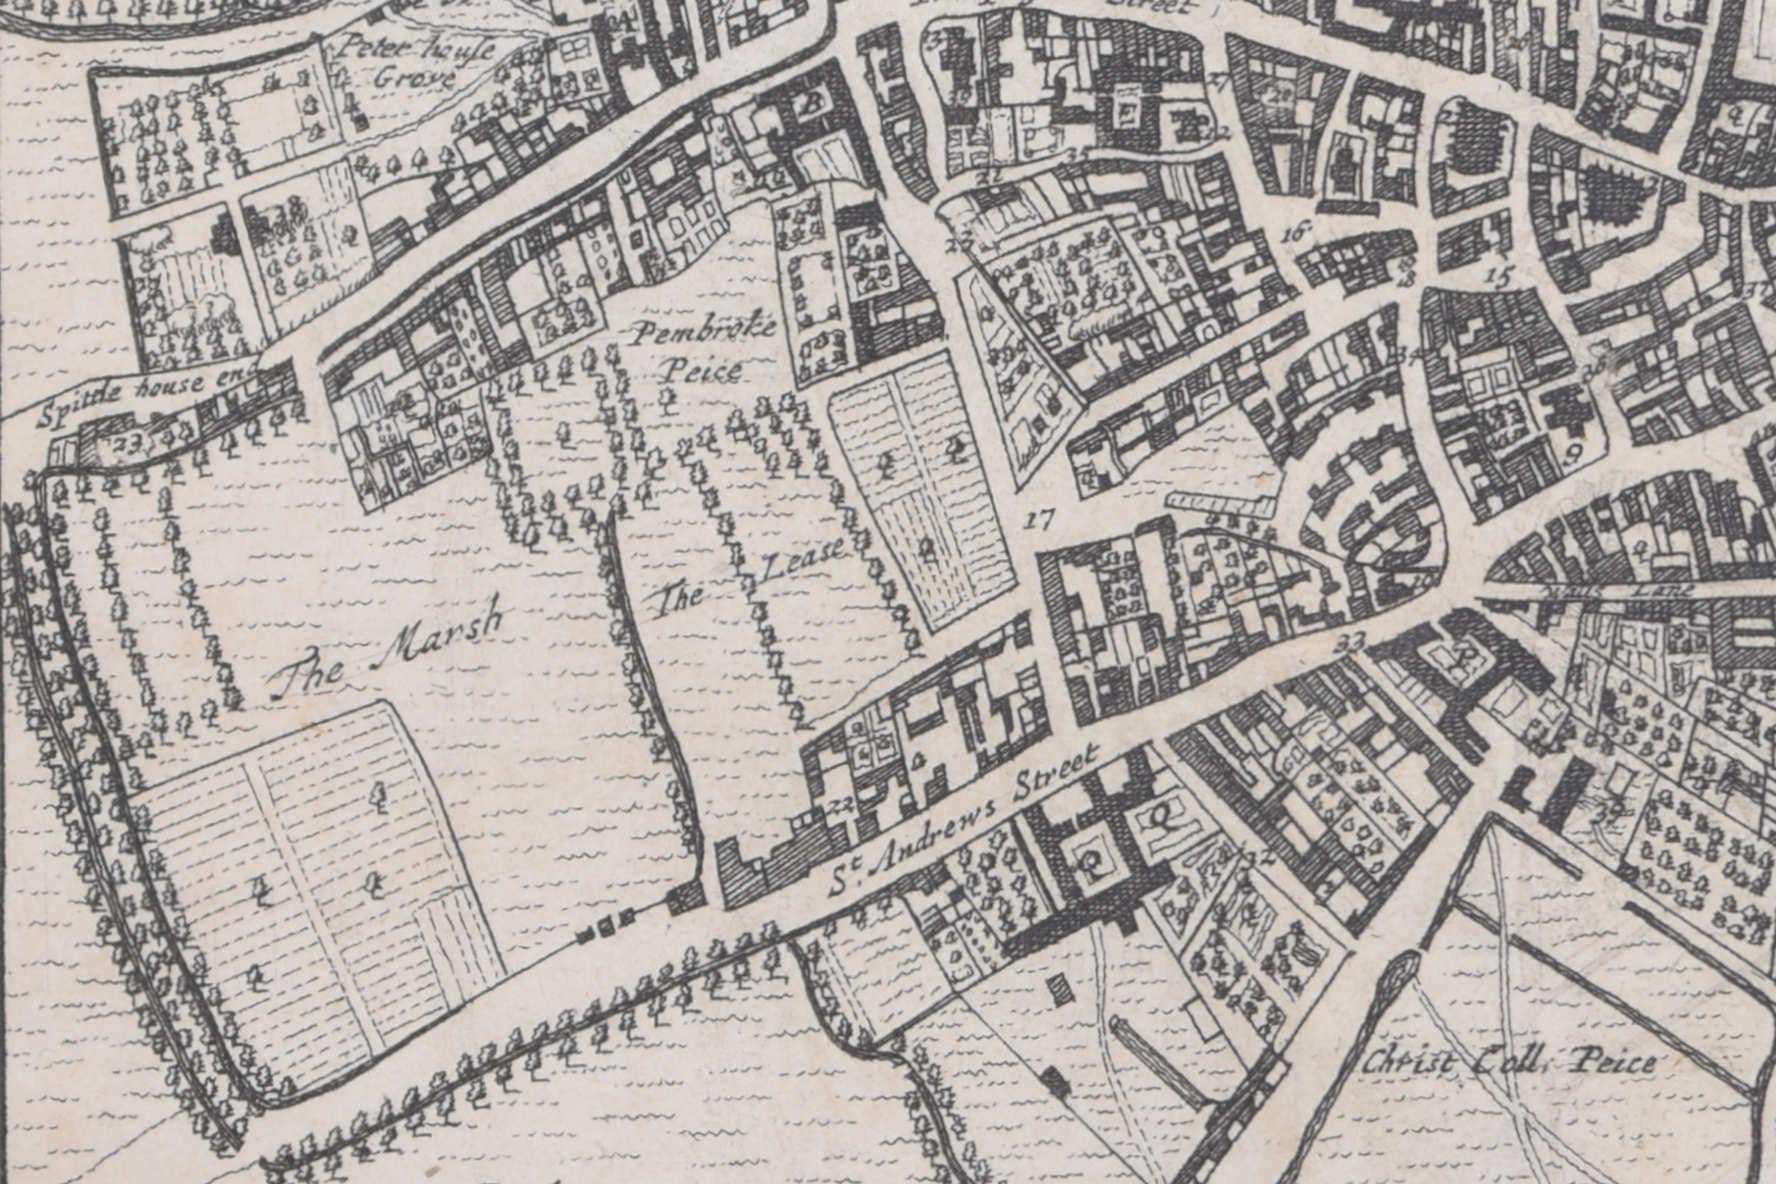 Pieter van der Aa (1659-1733), after David Loggan (1634–1692)
Map of Cambridge
12 x 16 cm
Engraving (1727)

An eighteenth-century map of Cambridge engraved by Pieter van der Aa after David Loggan, the noted engraver, draughtsman, and painter who